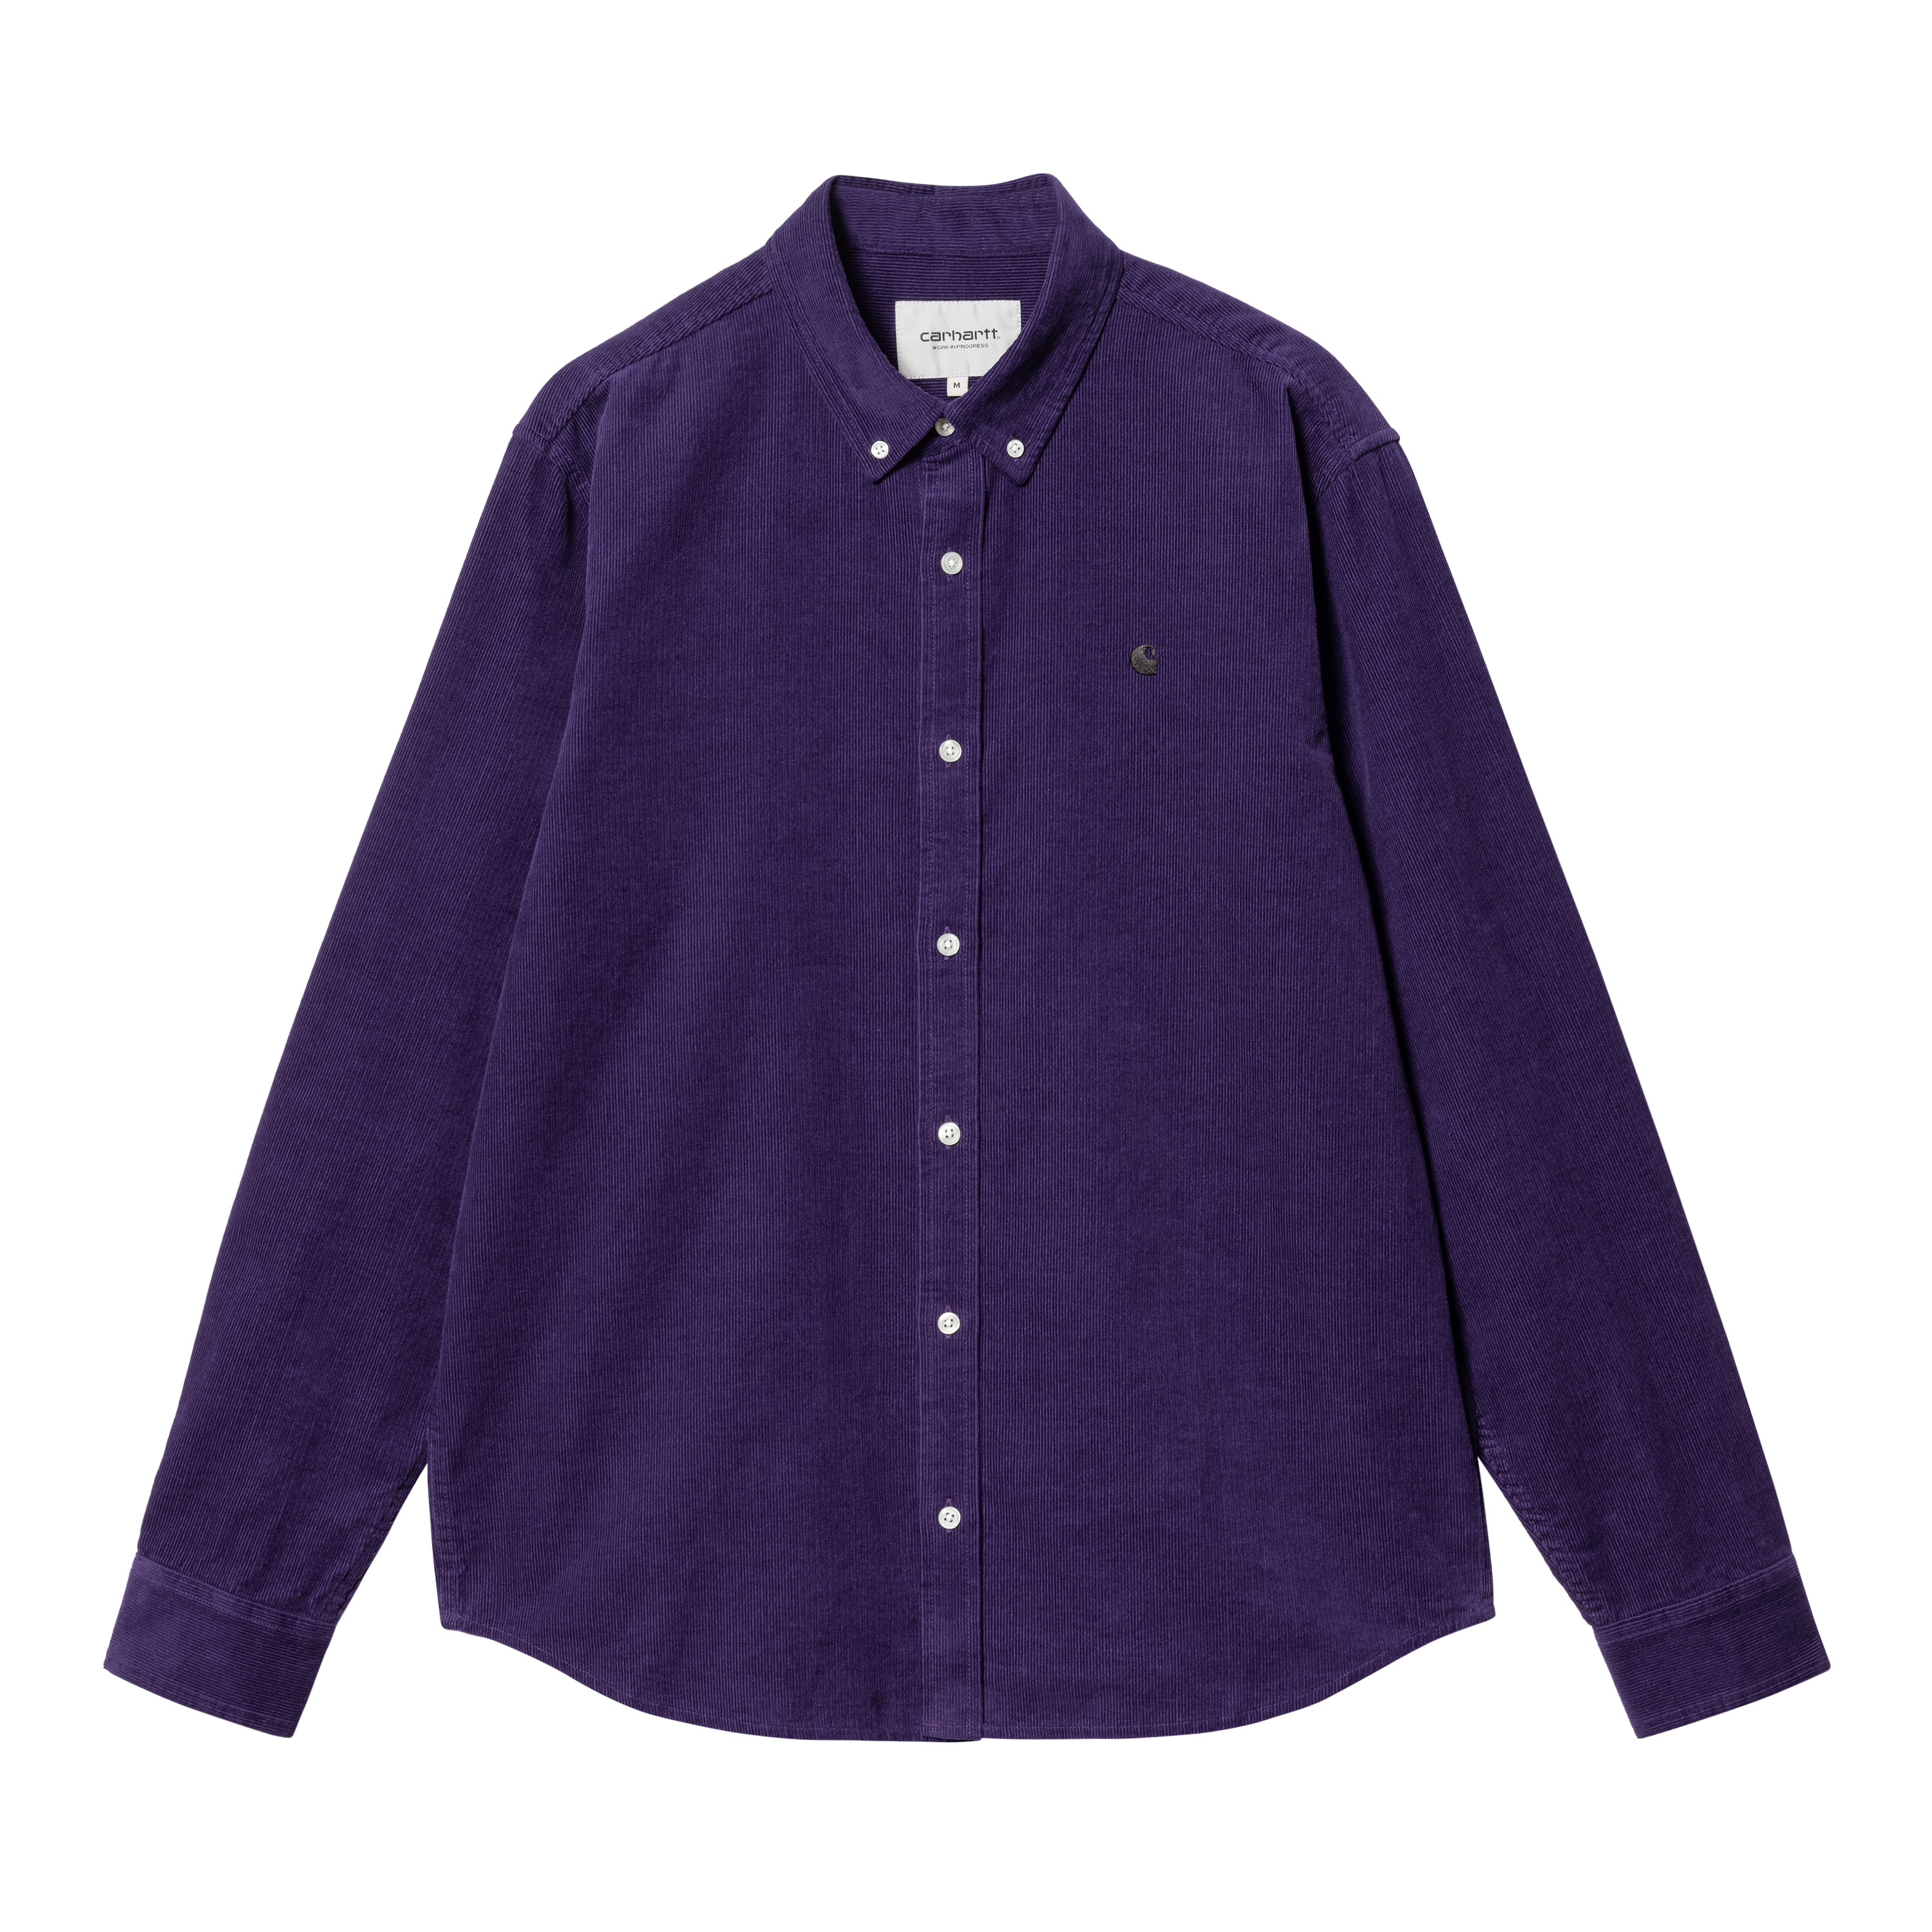 Carhartt WIP Long Sleeve Madison Fine Cord Shirt in Lilla